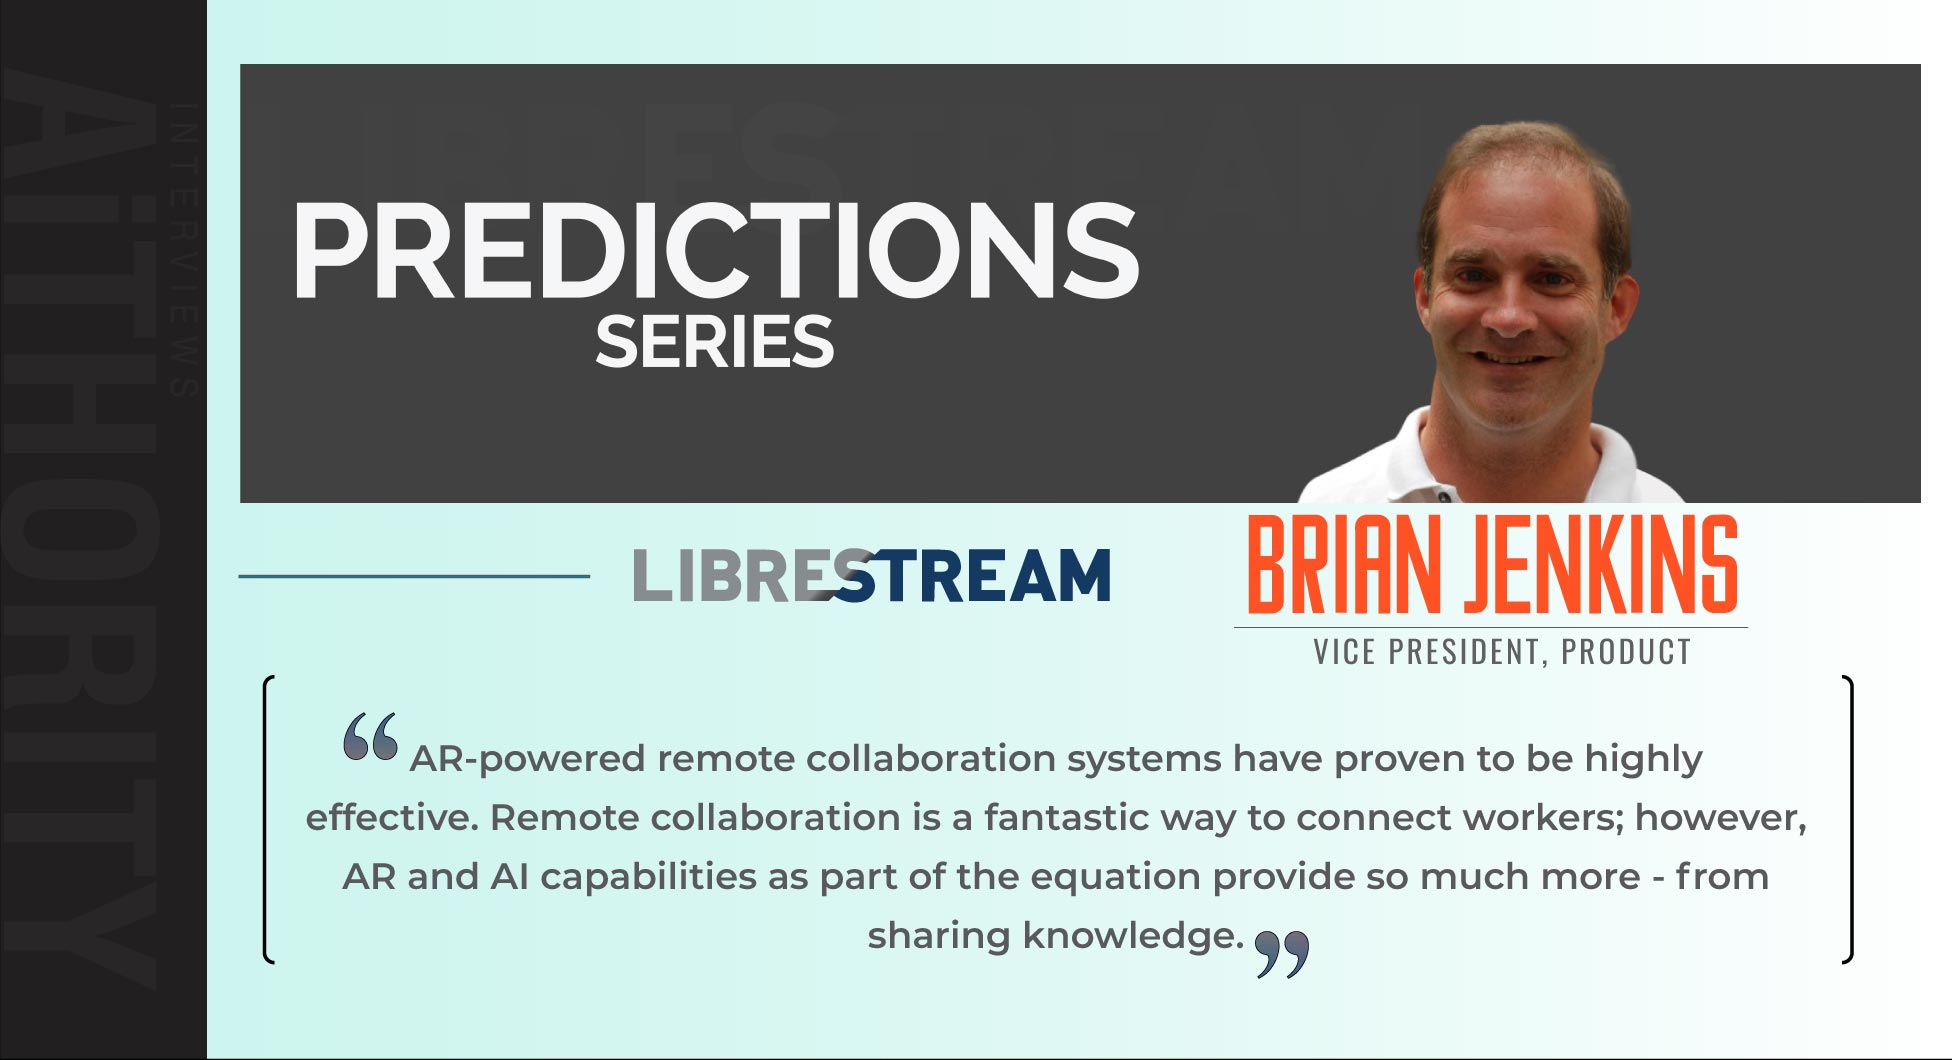 Brian Jenkins, VP, Product at Librestream